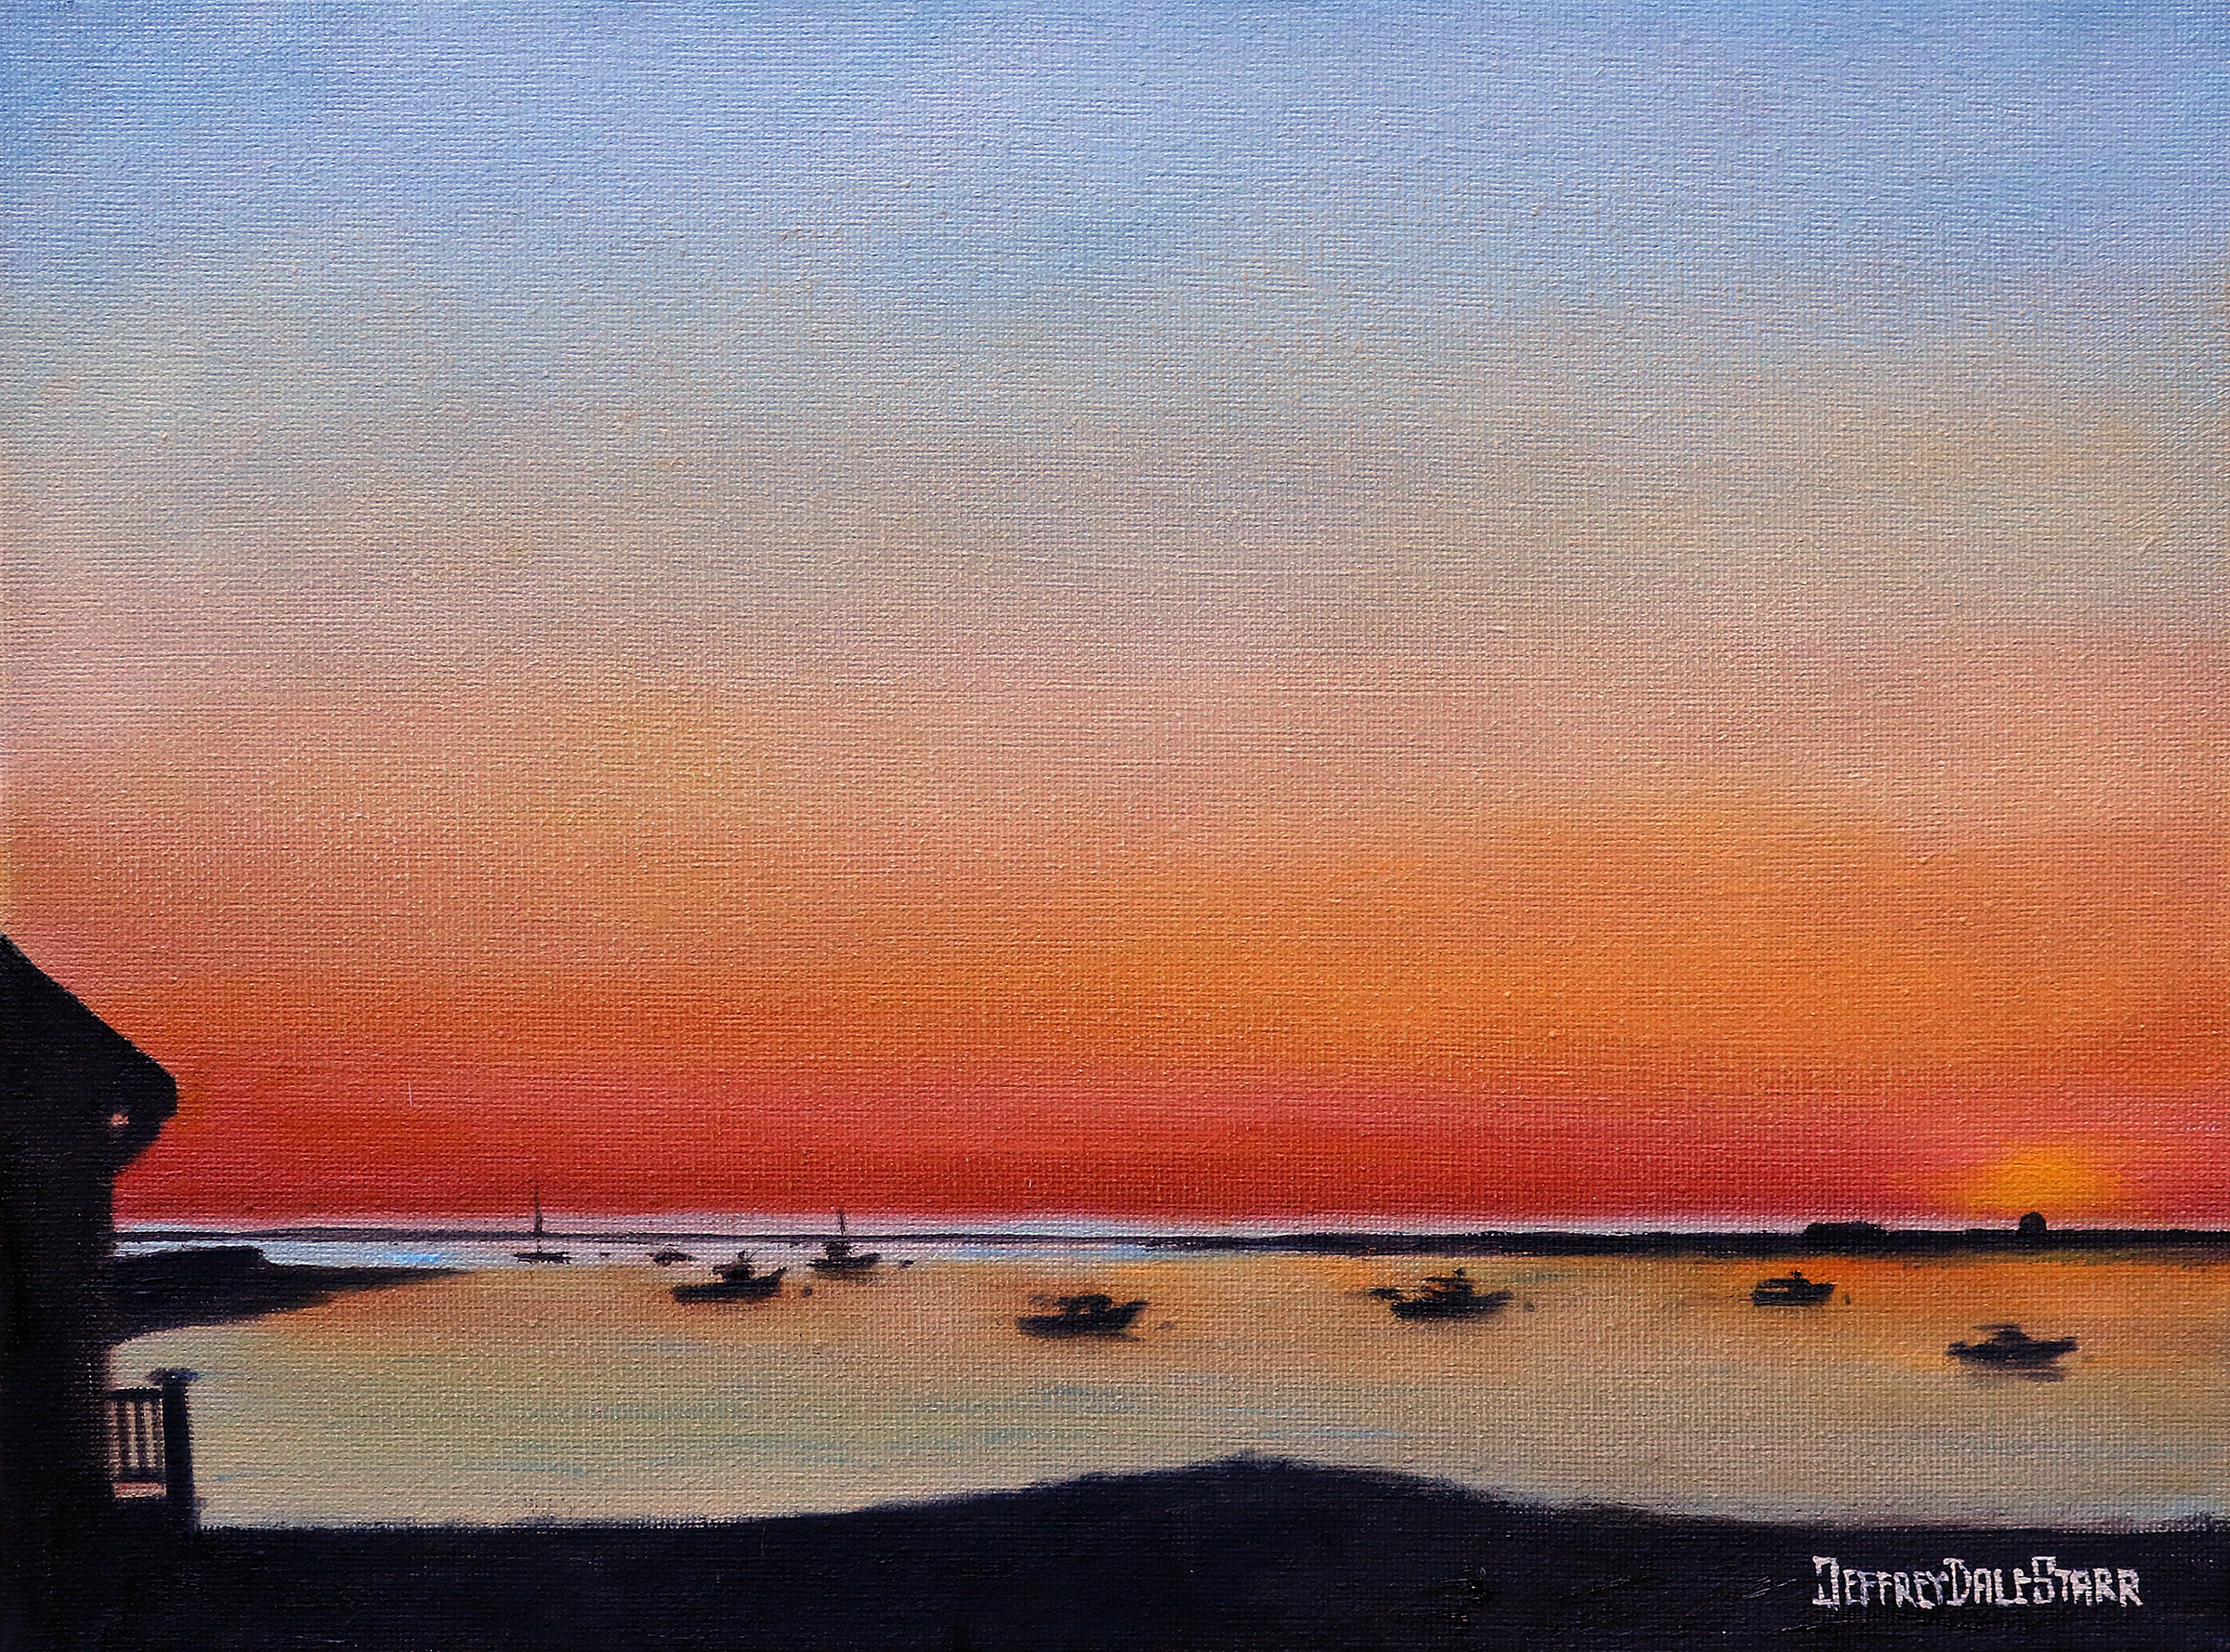 Oil painting "Cape Cod Sunrise" by Jeffrey Dale Starr